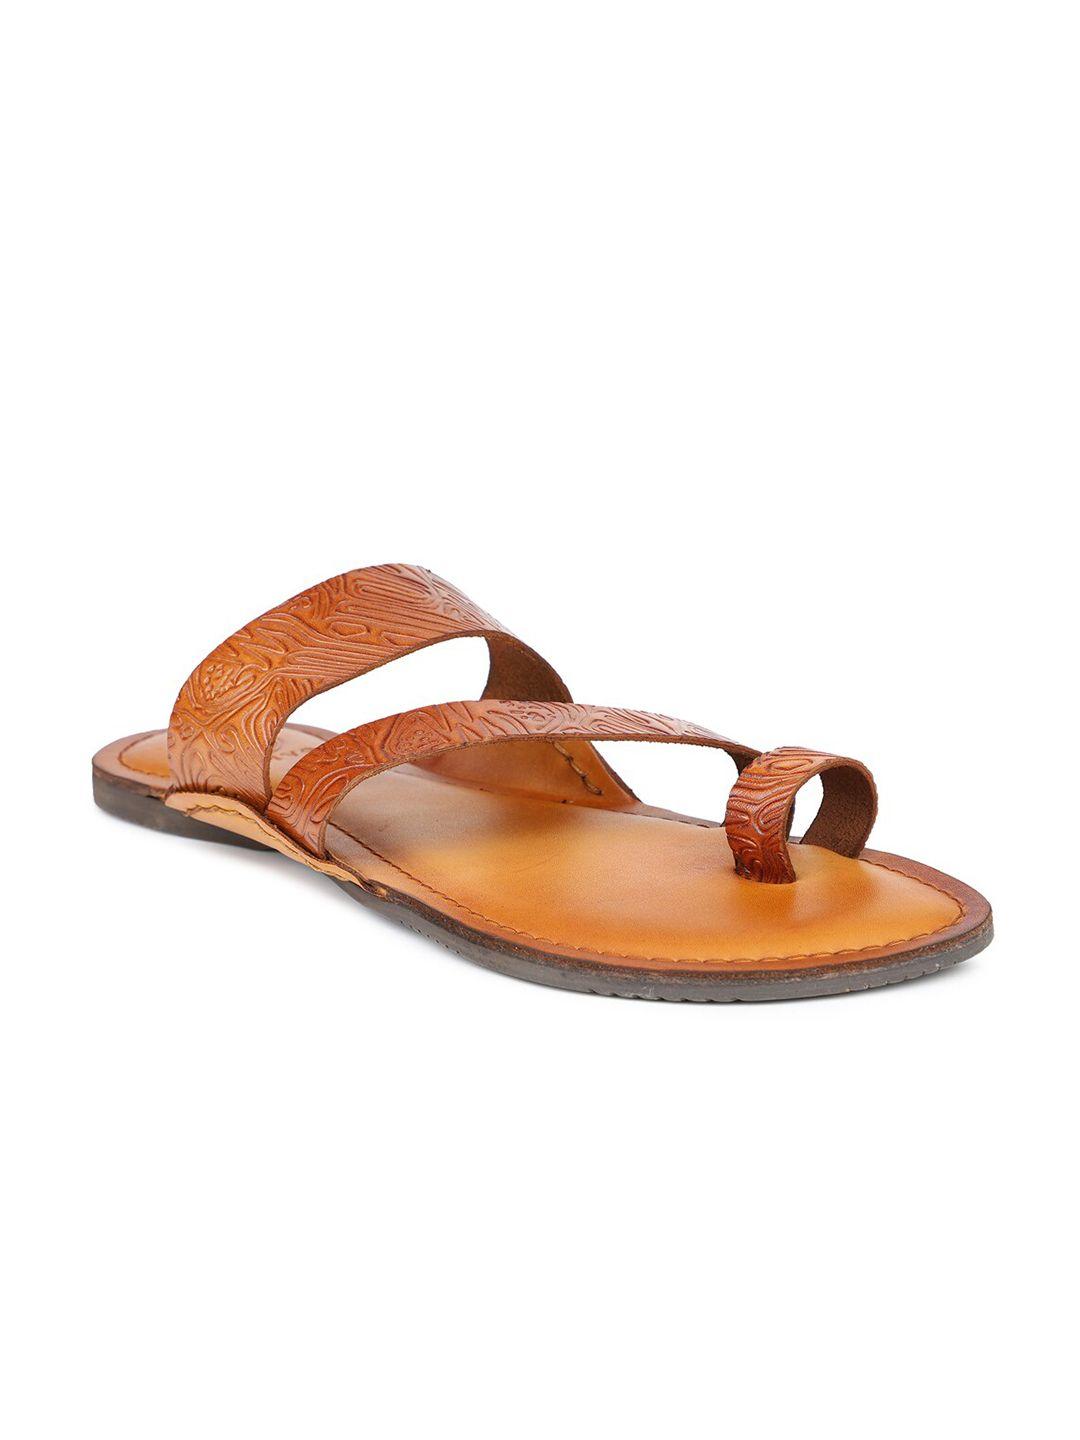 privo men tan & black leather comfort sandals